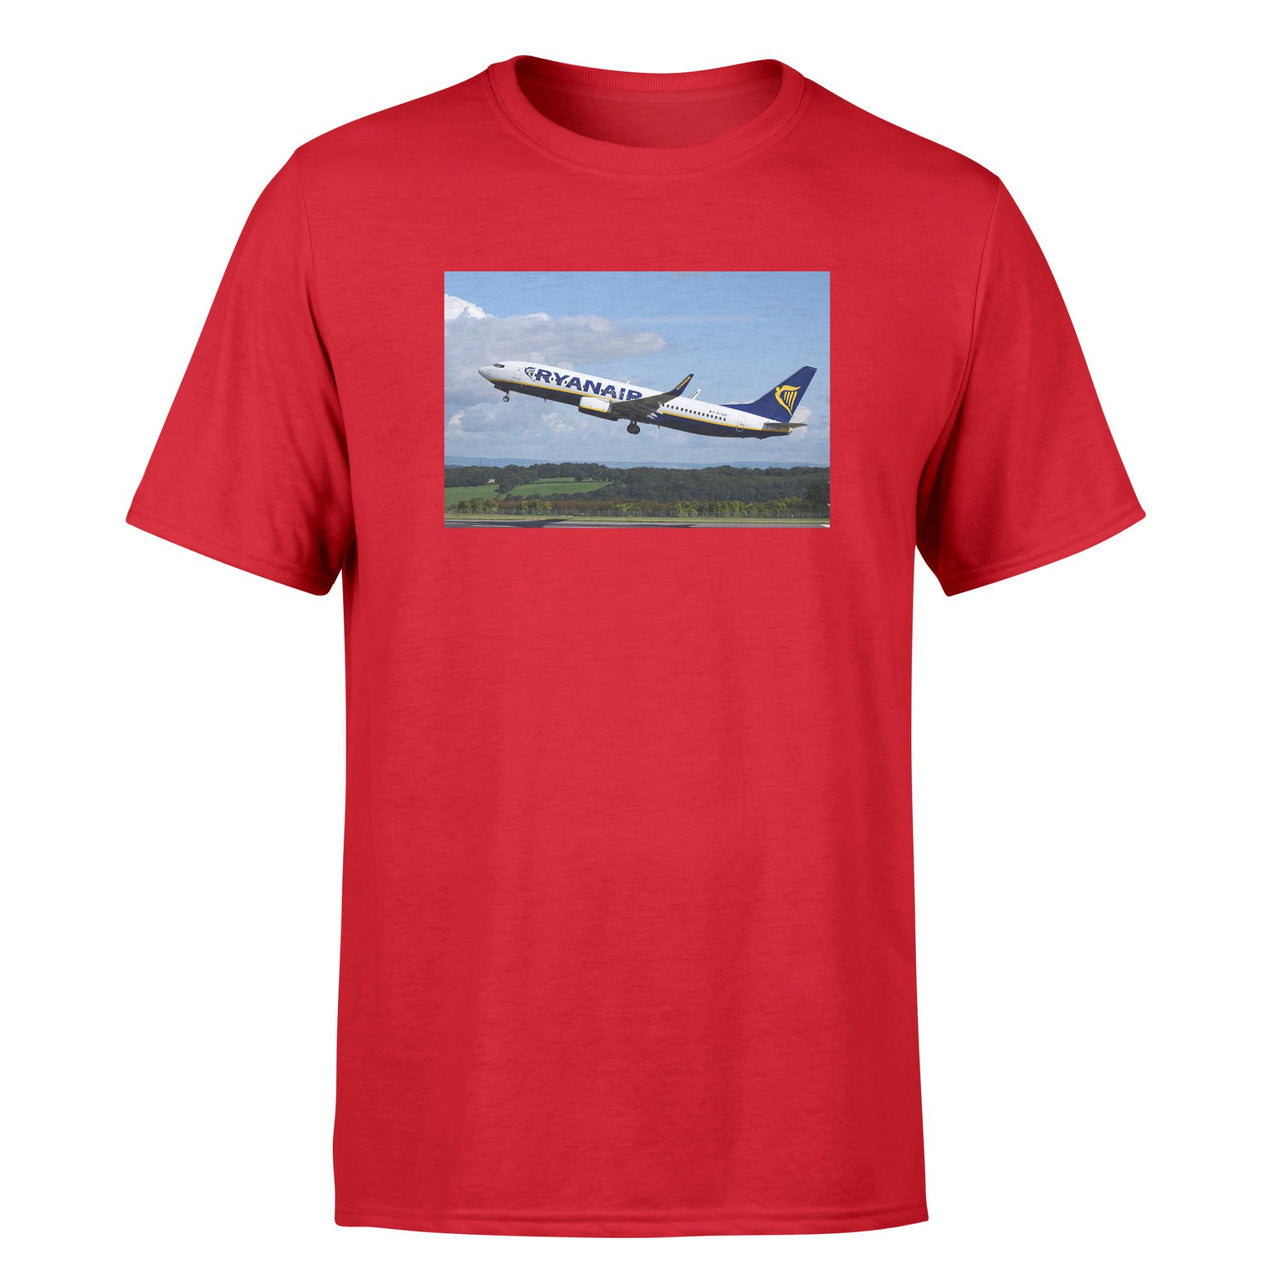 Departing Ryanair's Boeing 737 Designed T-Shirts